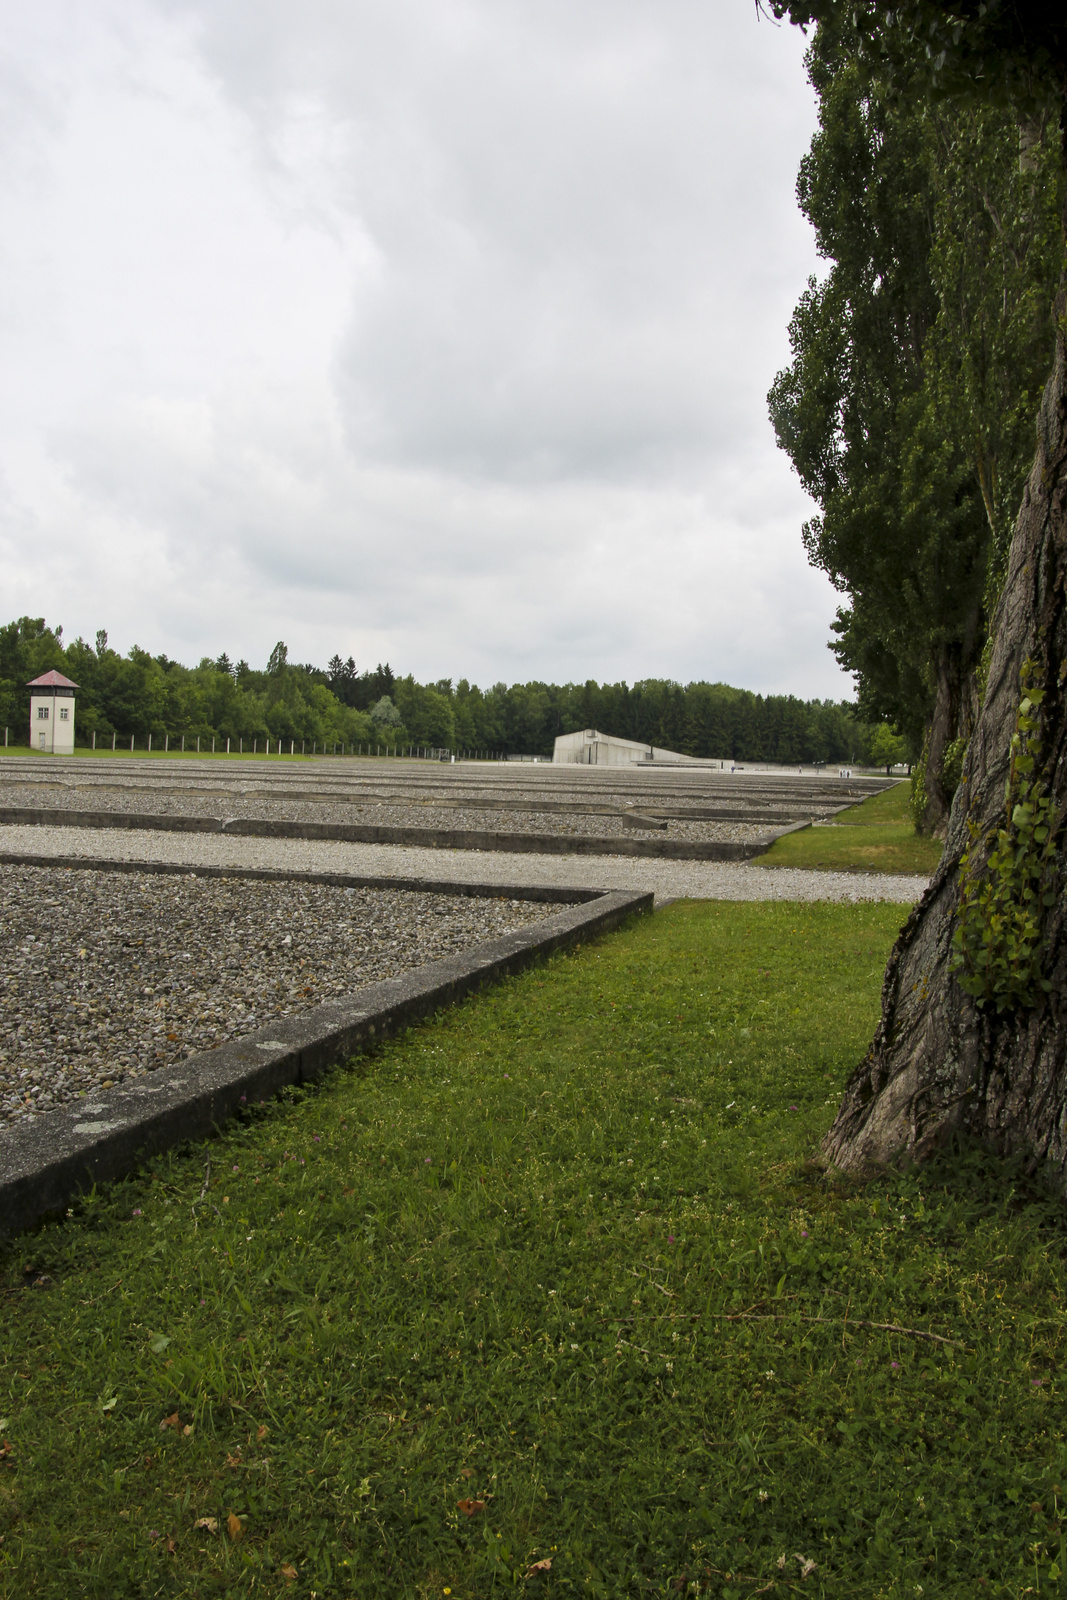 Dachau KZ Lager 05